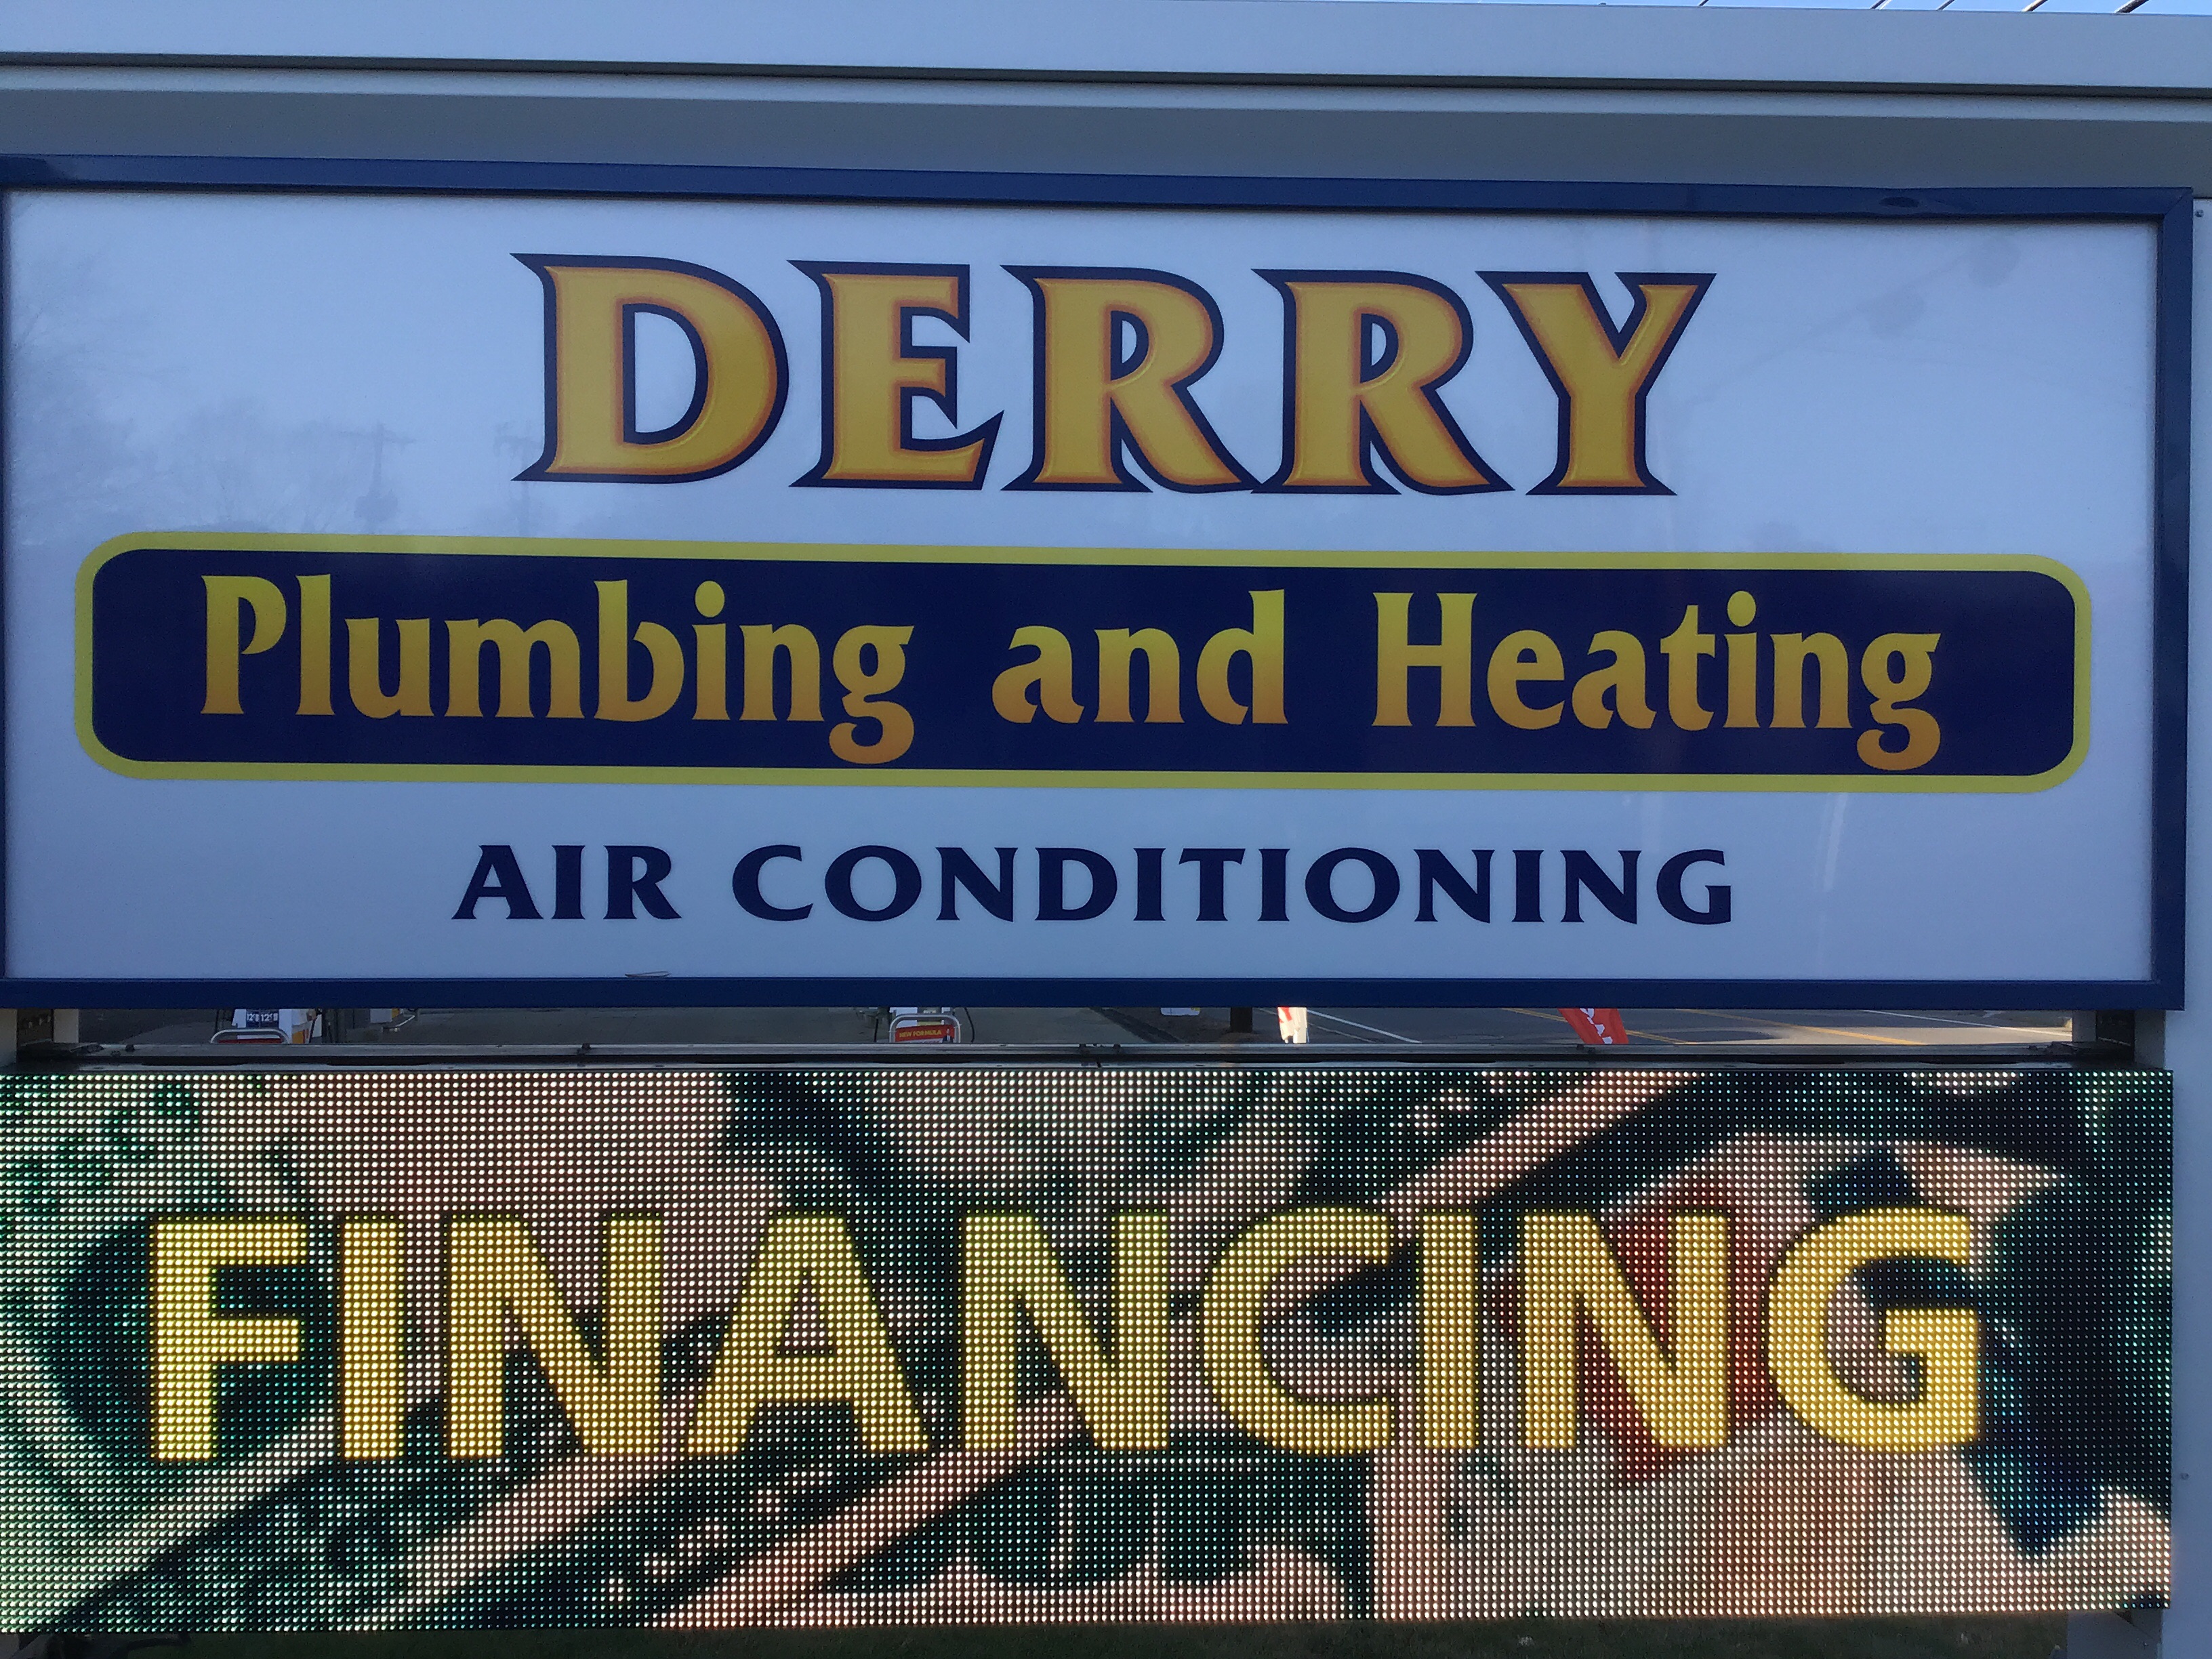 Derry Plumbing & Heating Logo